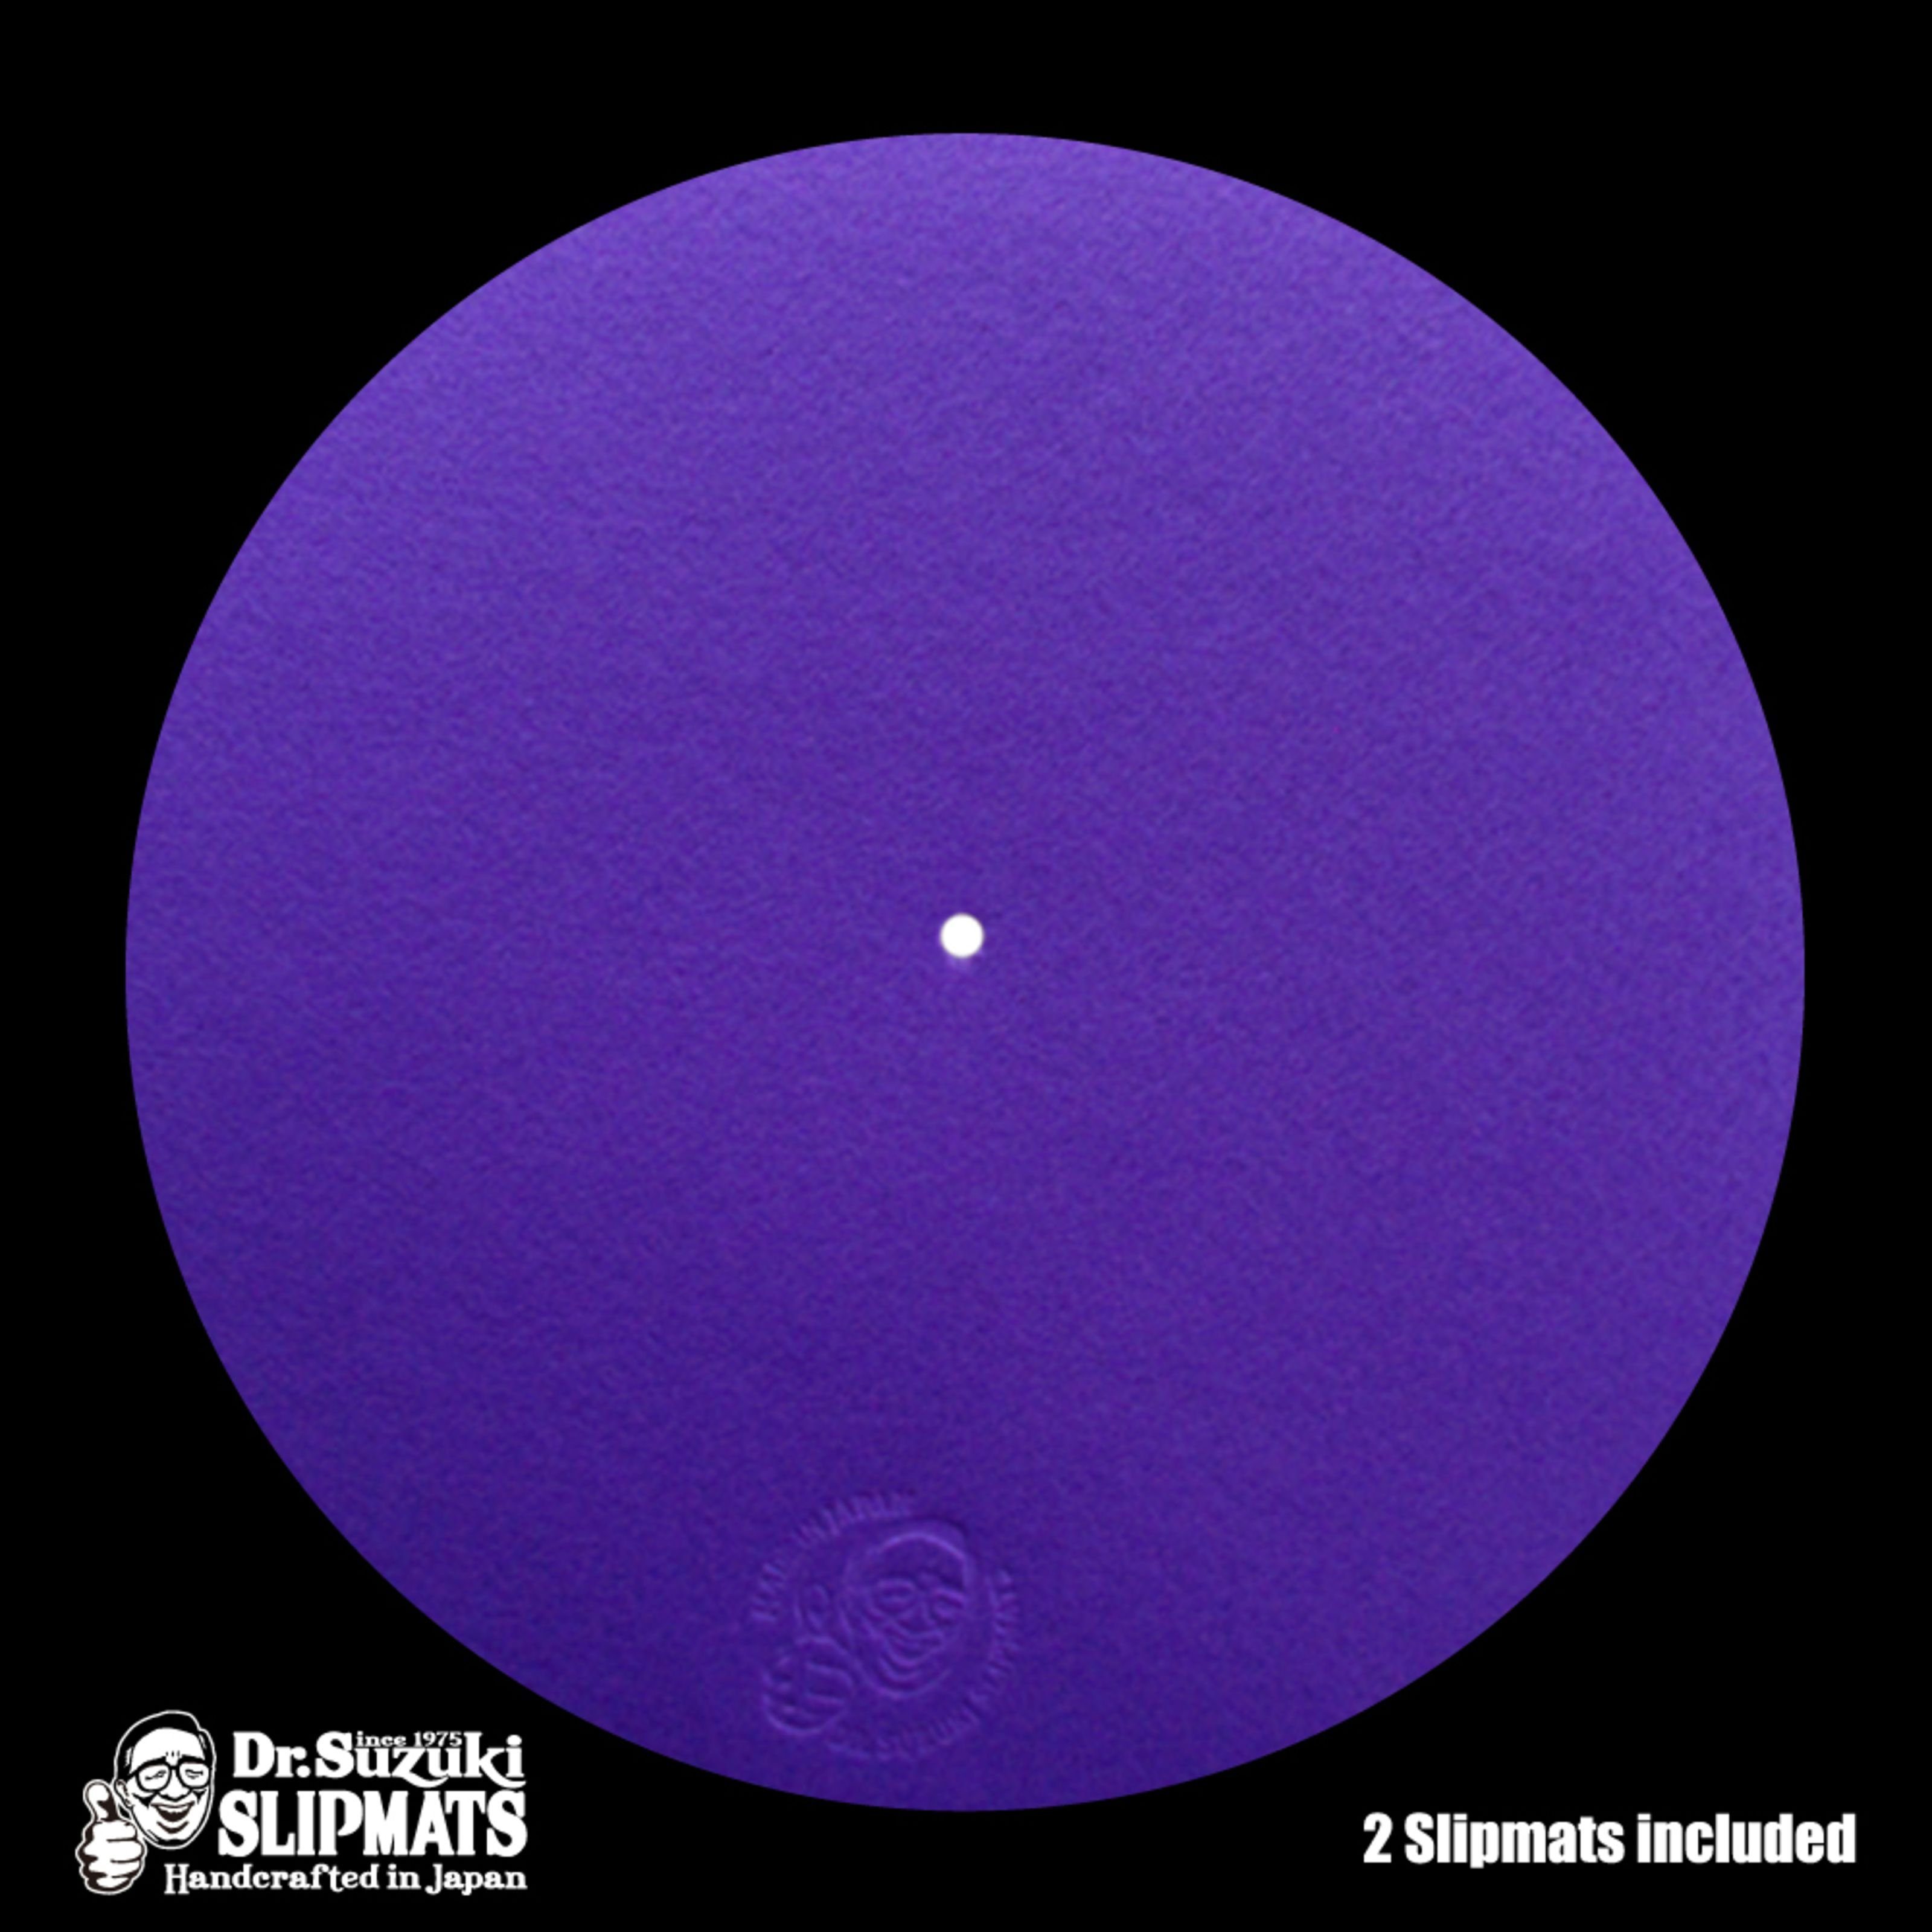 Dr. Suzuki Plattenspieler (Tablecloth 12" Mix-Edition Slipmat purple (paar)